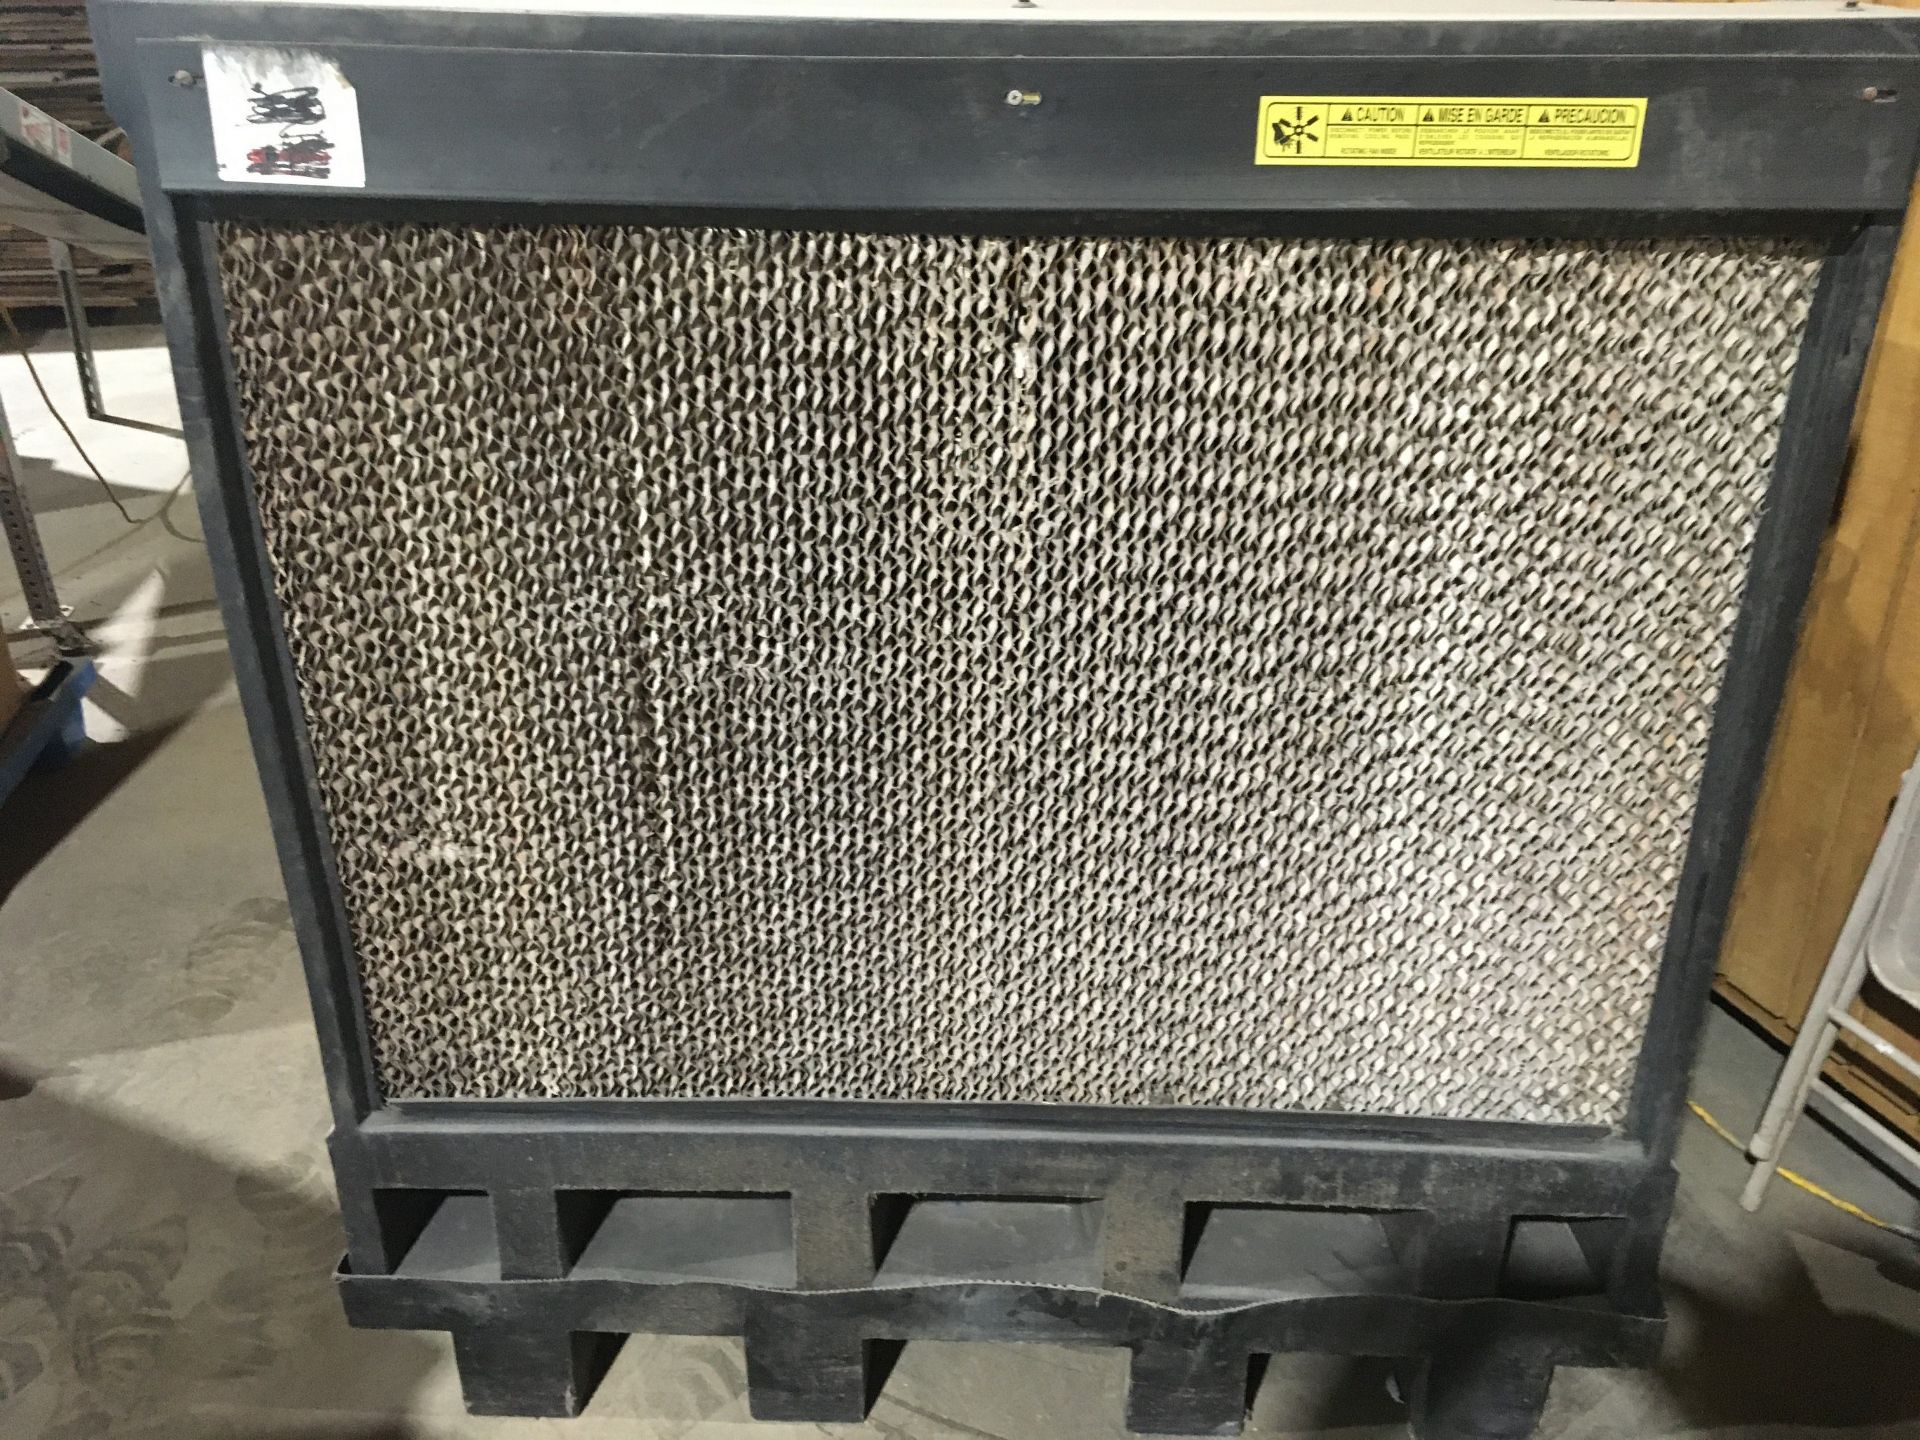 PortaCool Evaporative Cooler - Image 2 of 2